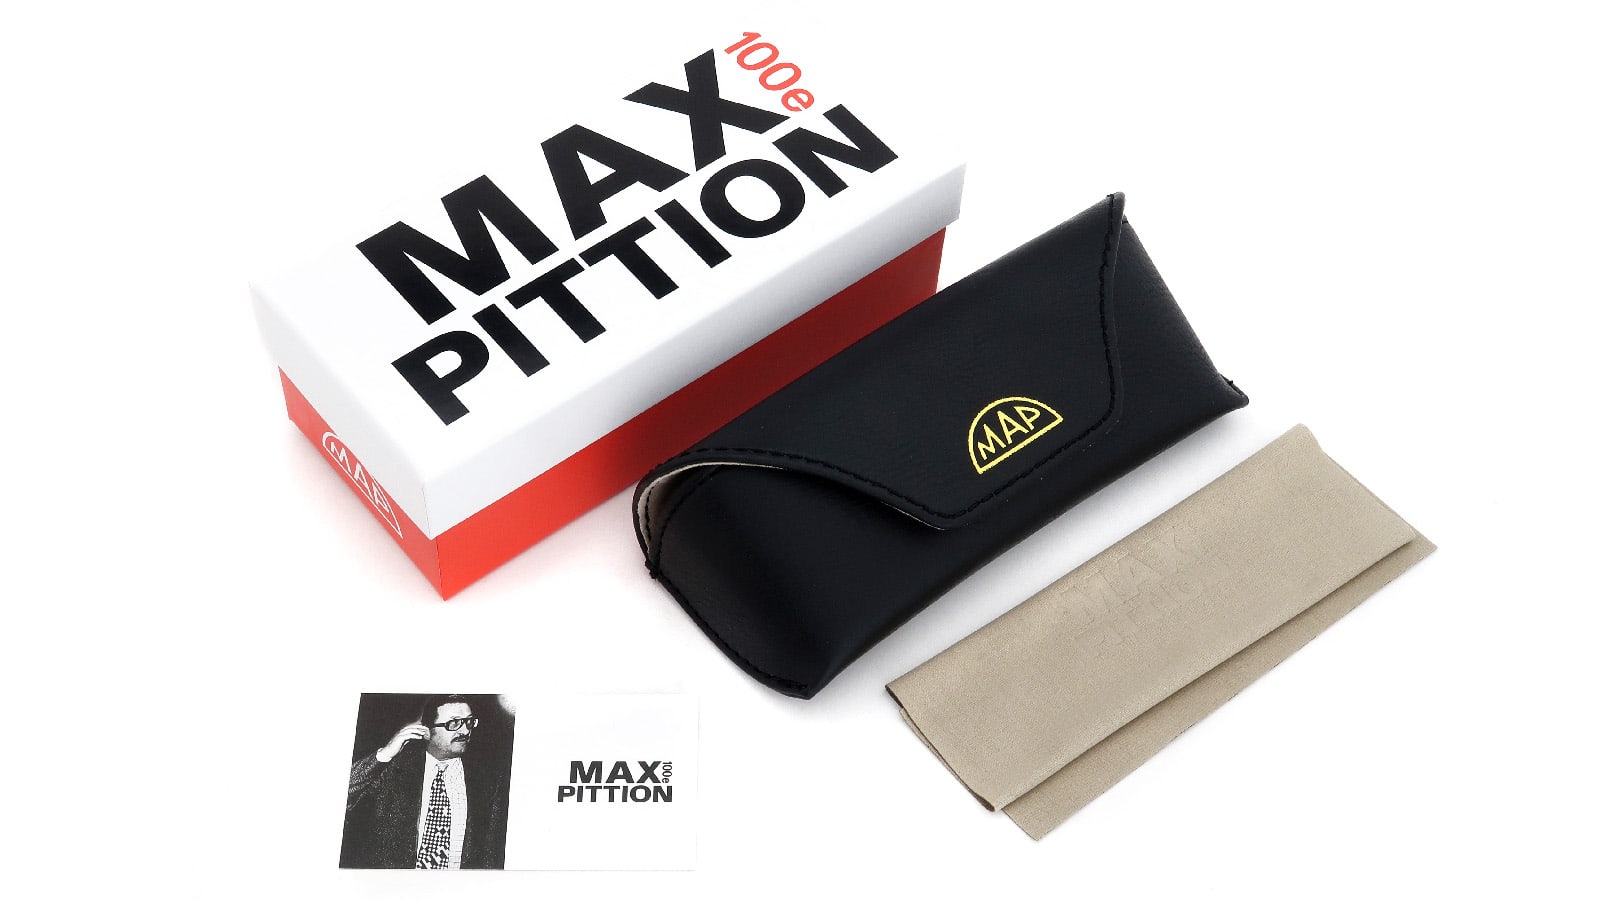 MAX PITTION V WELLINGTON (MXPL-003A) PIANO BLACK 15